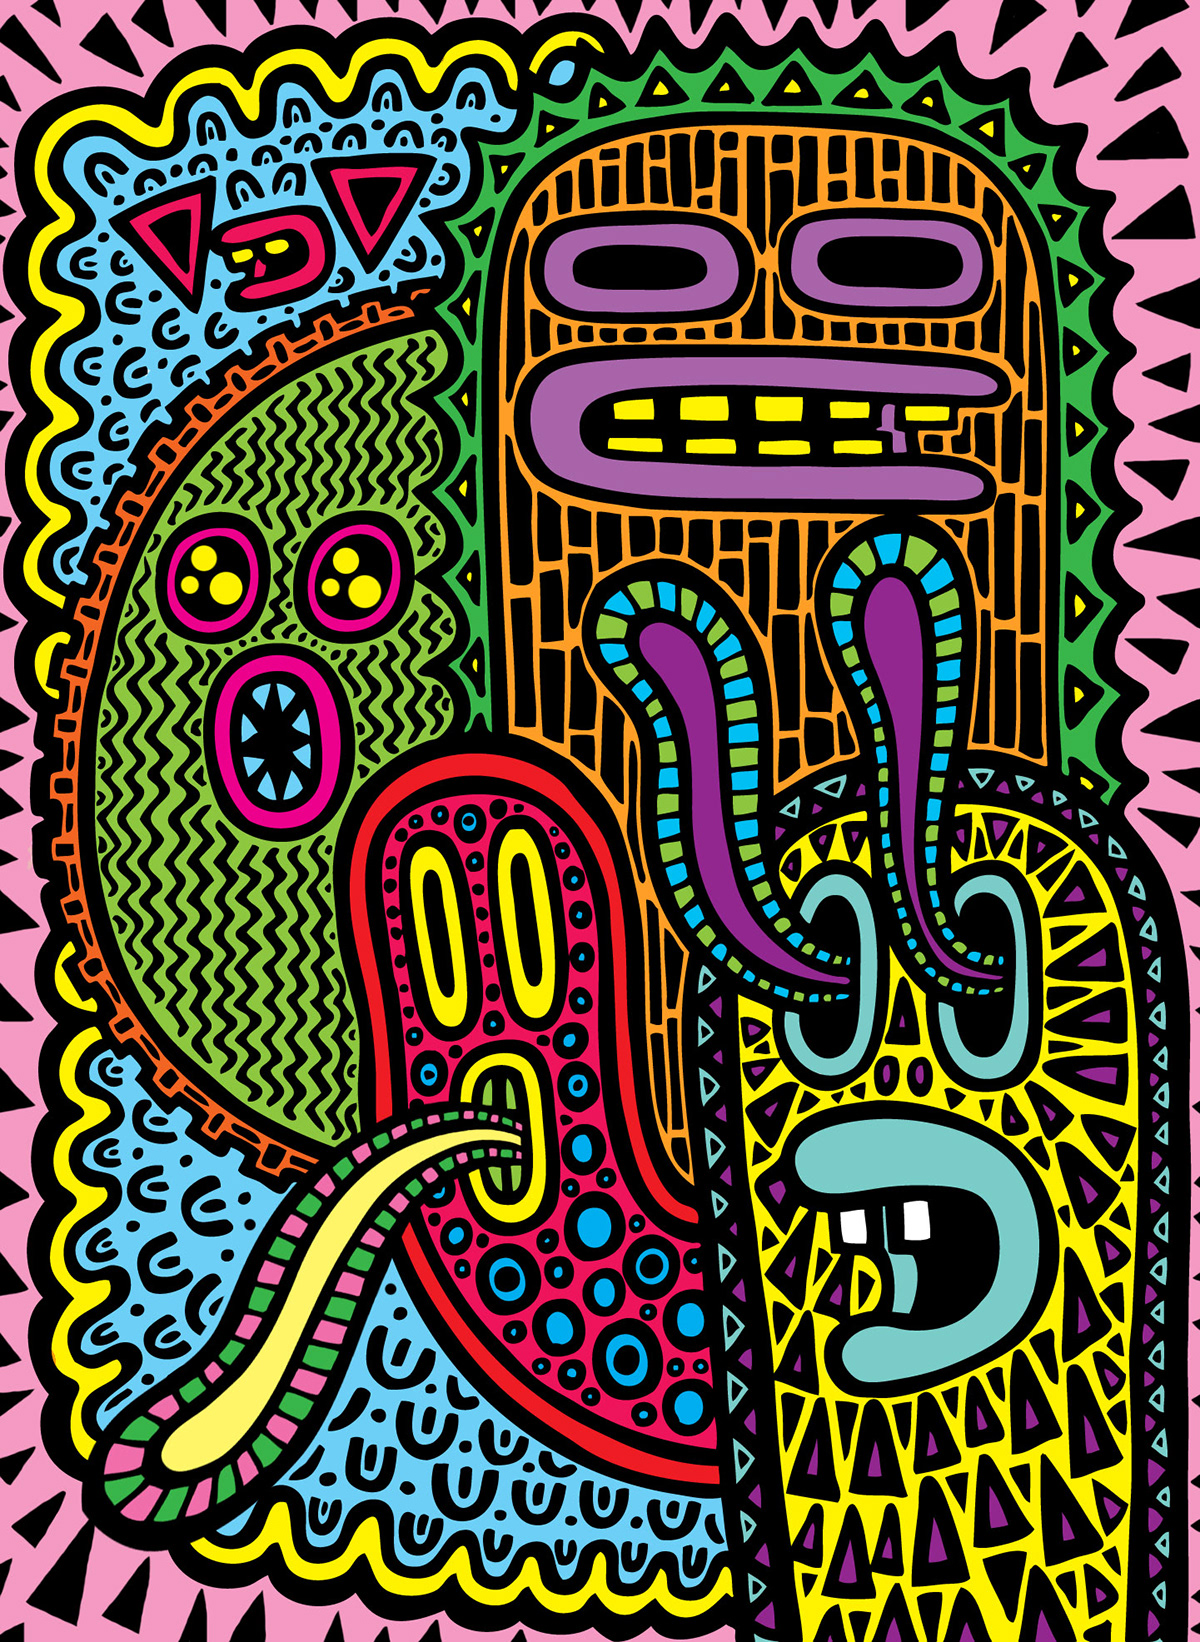 graphic pattern bright surreal editorial magazine Street  art vibrant bold primary colours childrens Fun